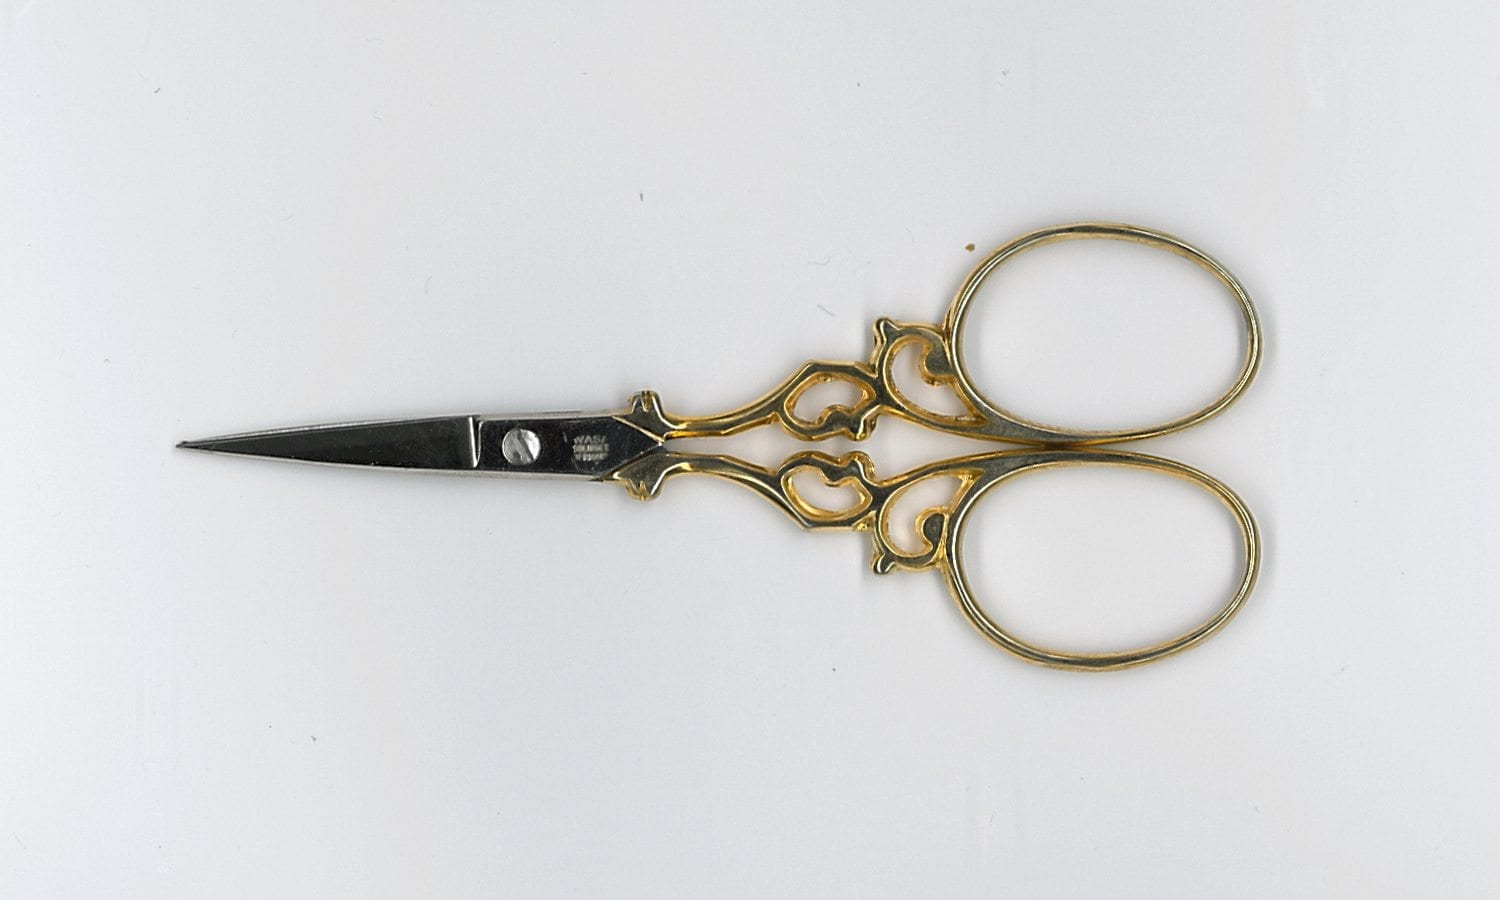 Gingher Scissors 4 in. Designer Embroidery Rynn